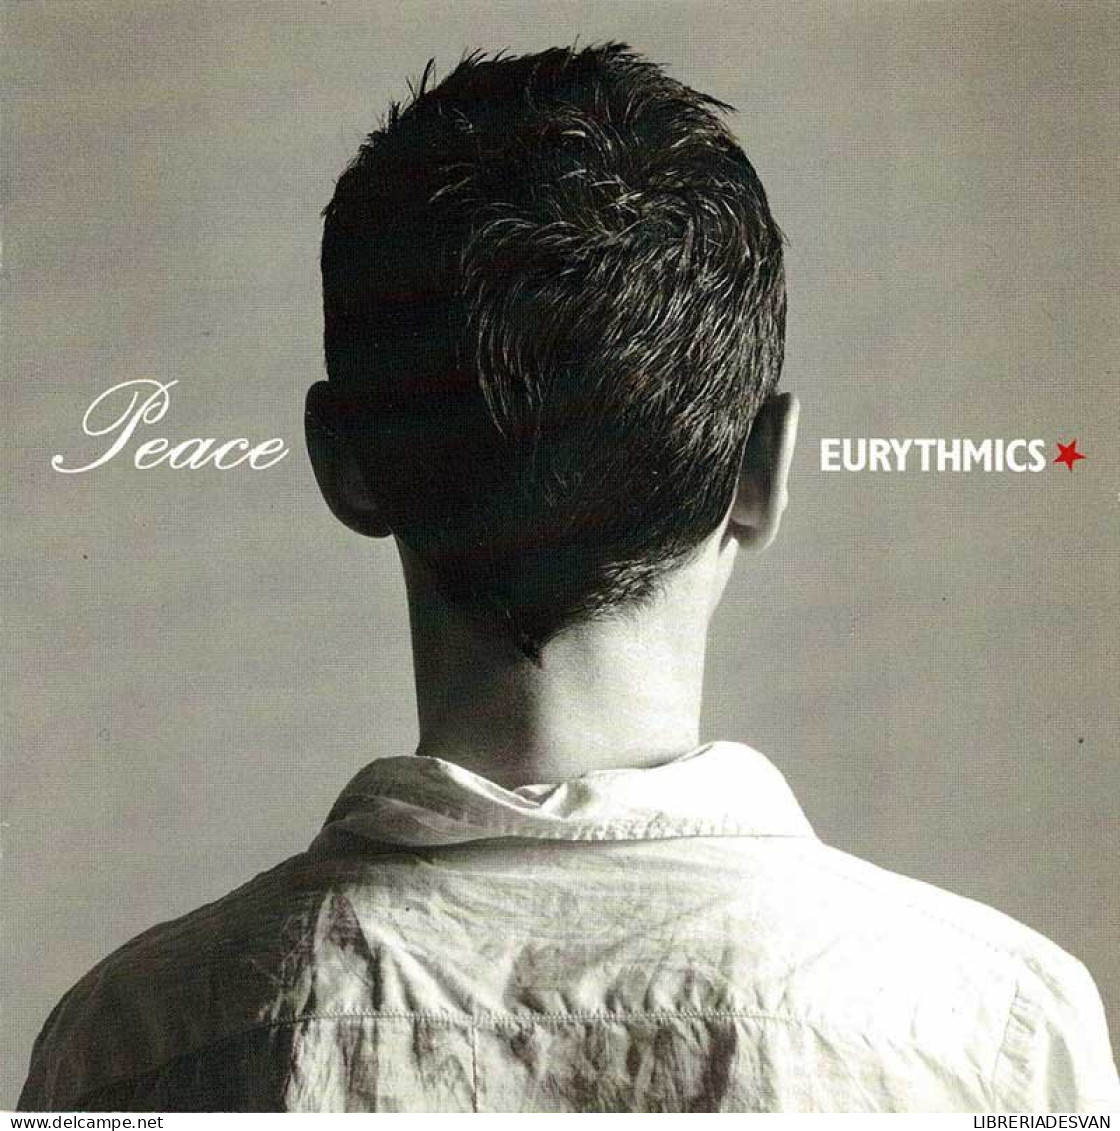 Eurythmics - Peace. CD - Disco & Pop